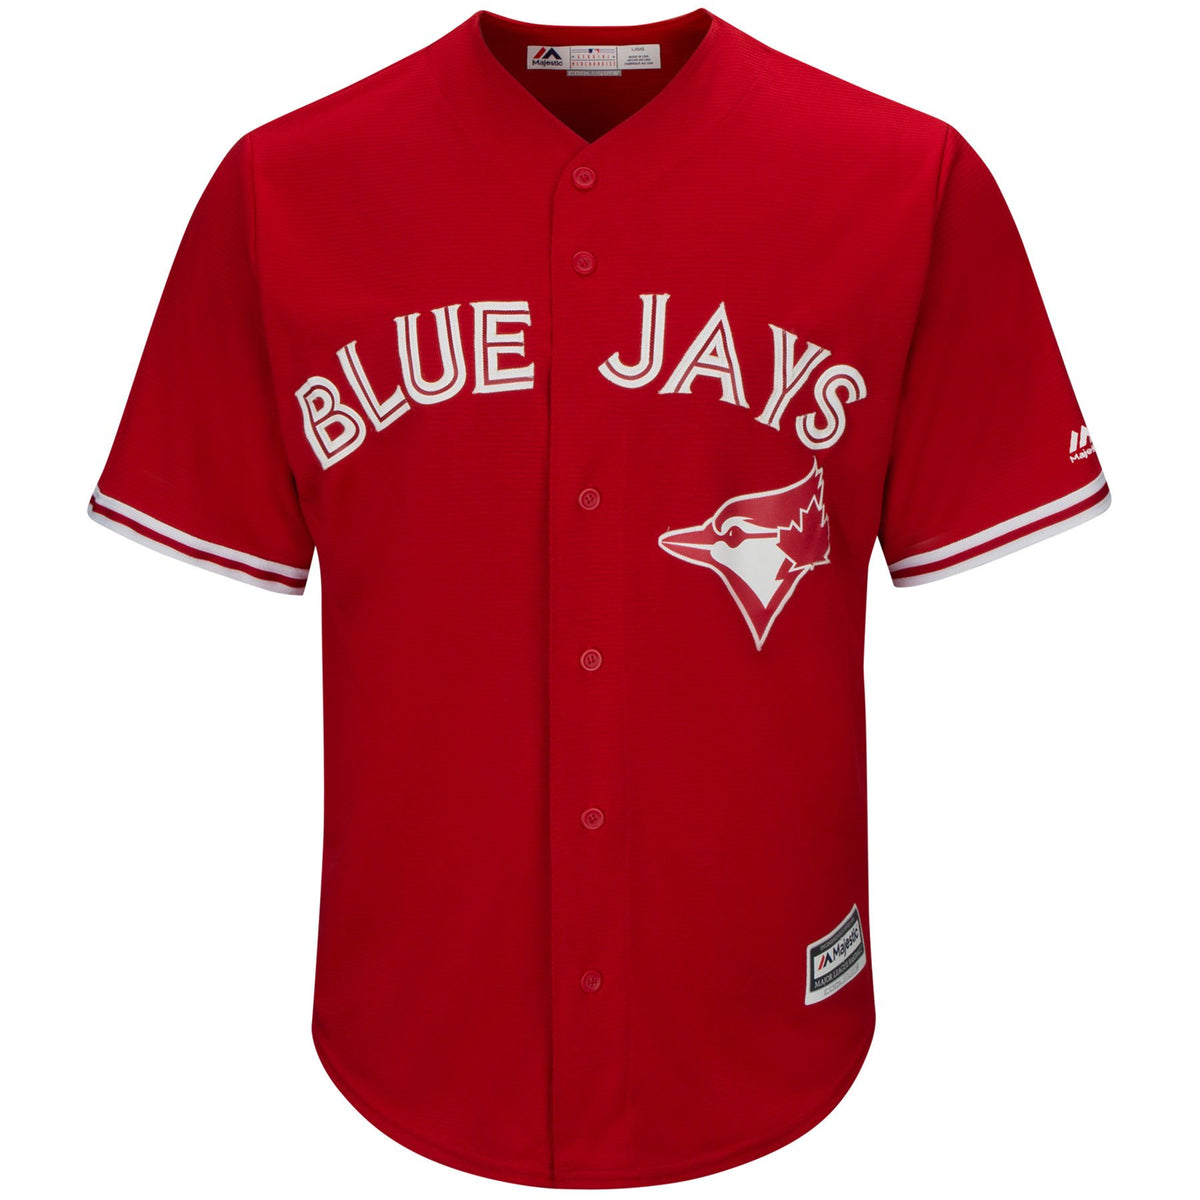 Blue Jays Replica Adult Alternate Red Jersey by Majestic (BLANK